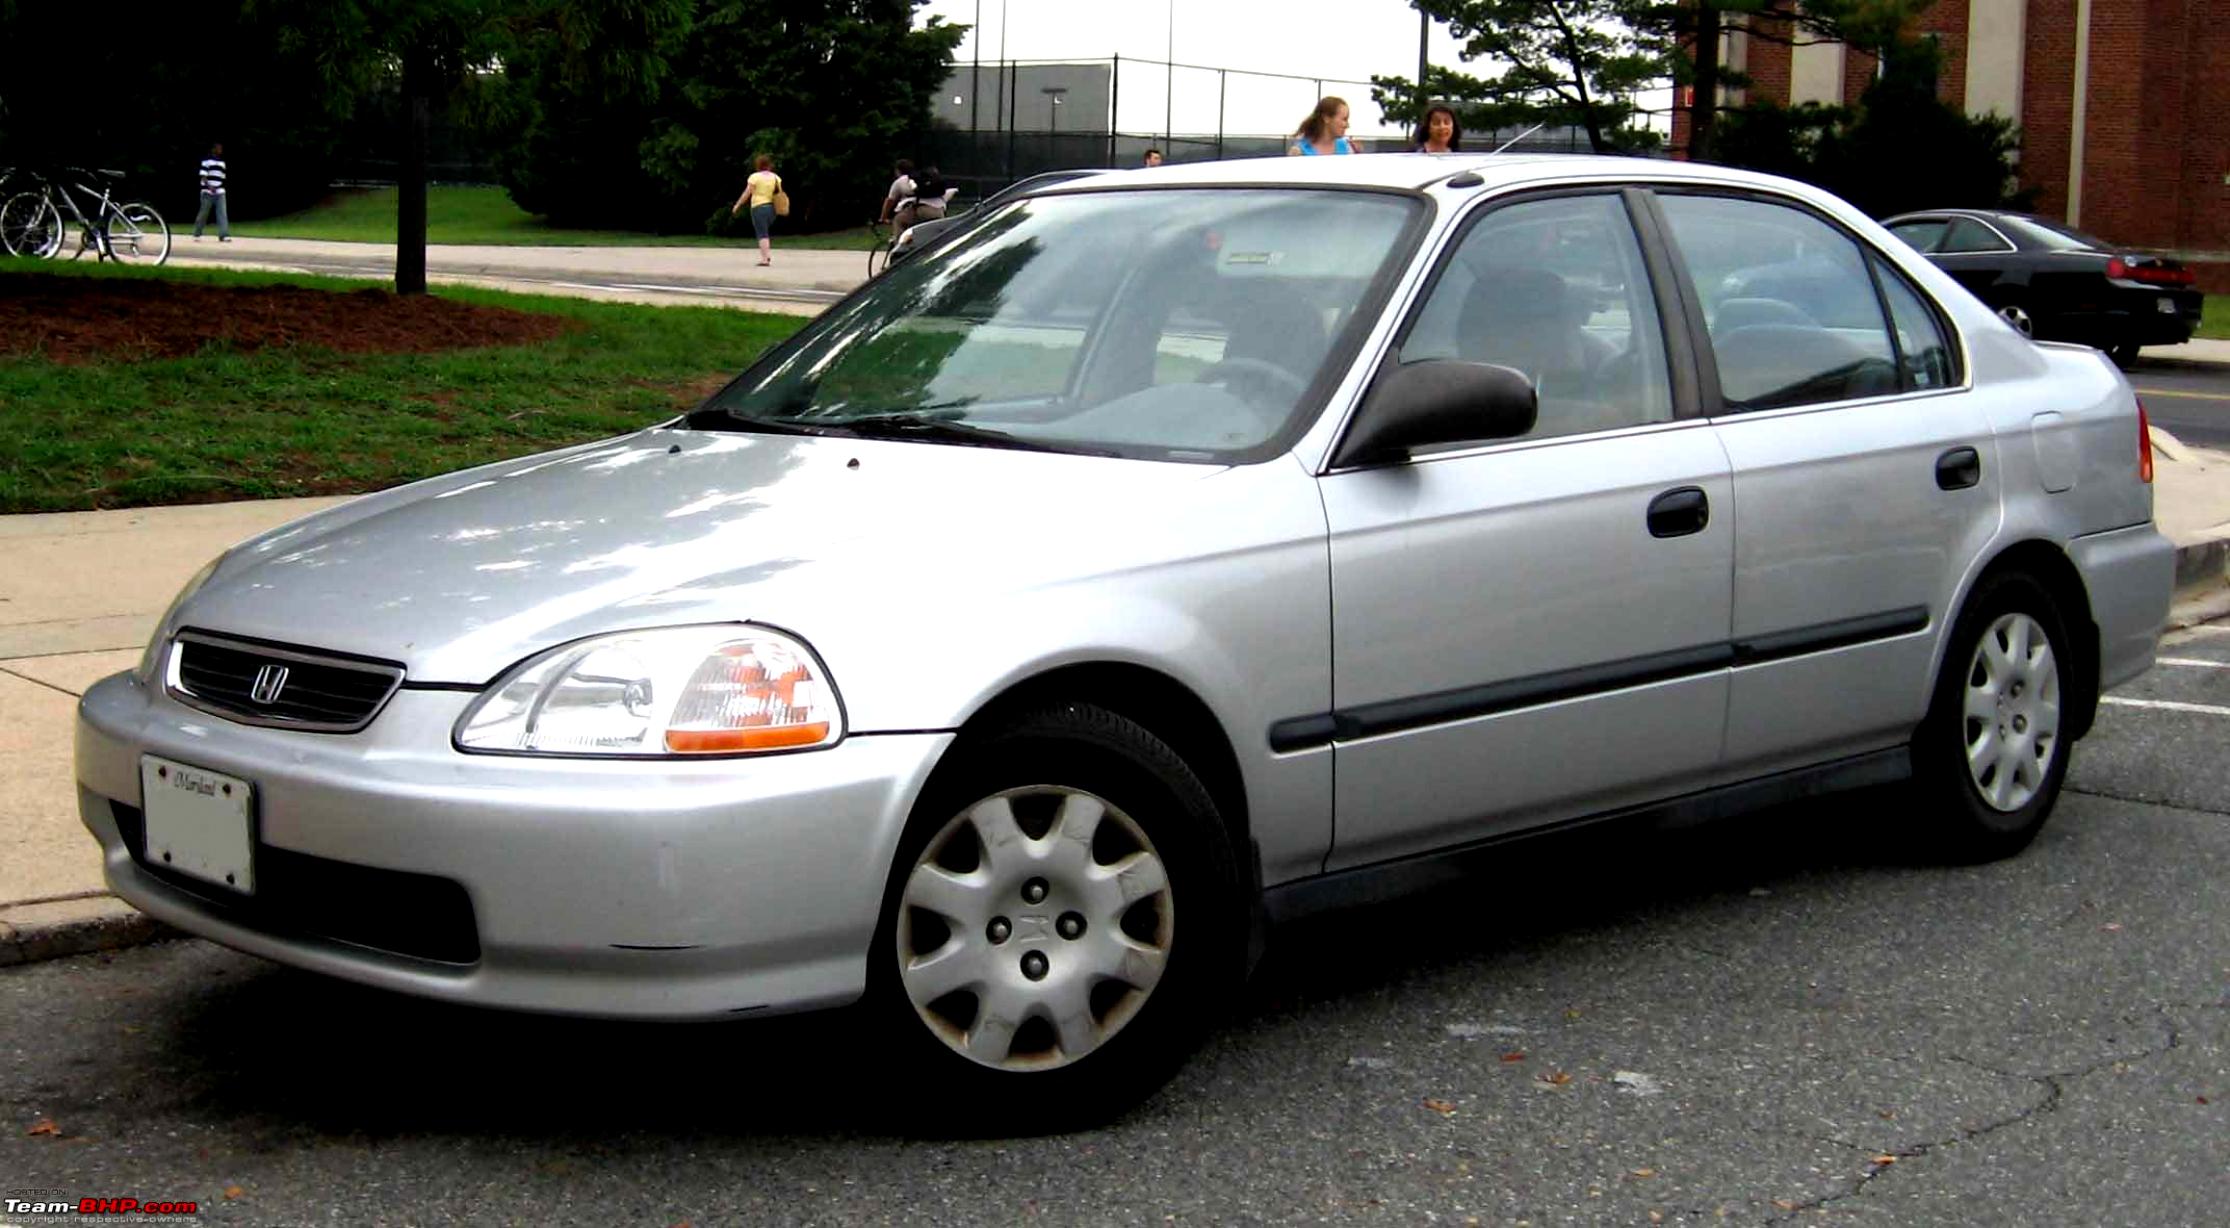 90 98 года. Honda Civic 1998. Honda Civic 1998 седан. Honda Civic 98 седан. Хонда Цивик 1998 седан.